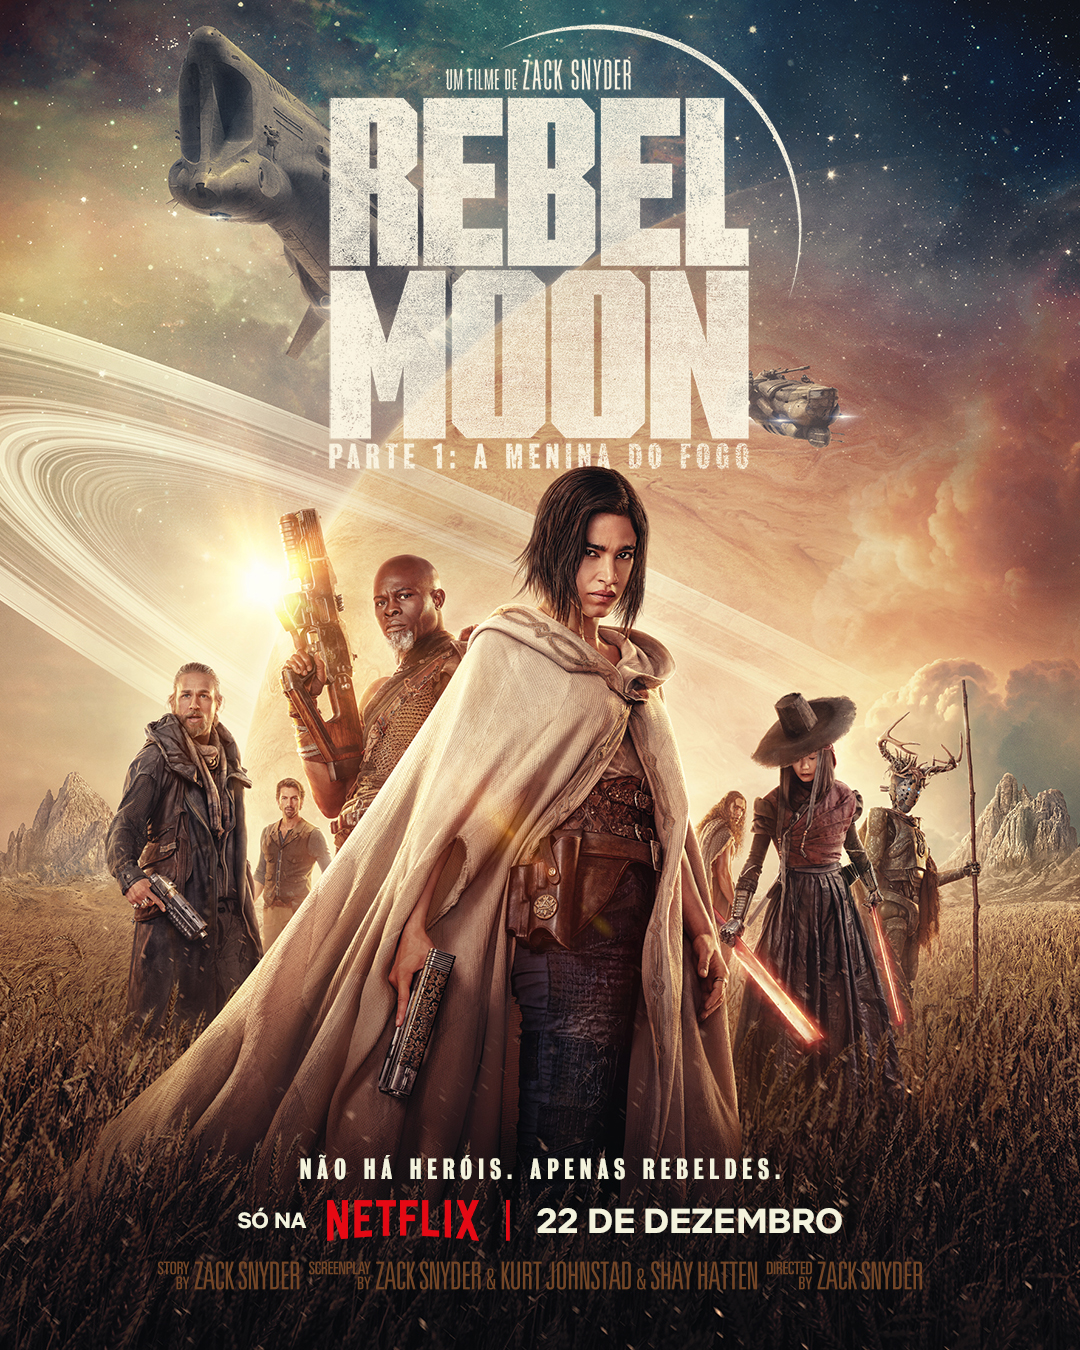 Rebel Moon – A menina do fogo (Parte 1) - V. Castro